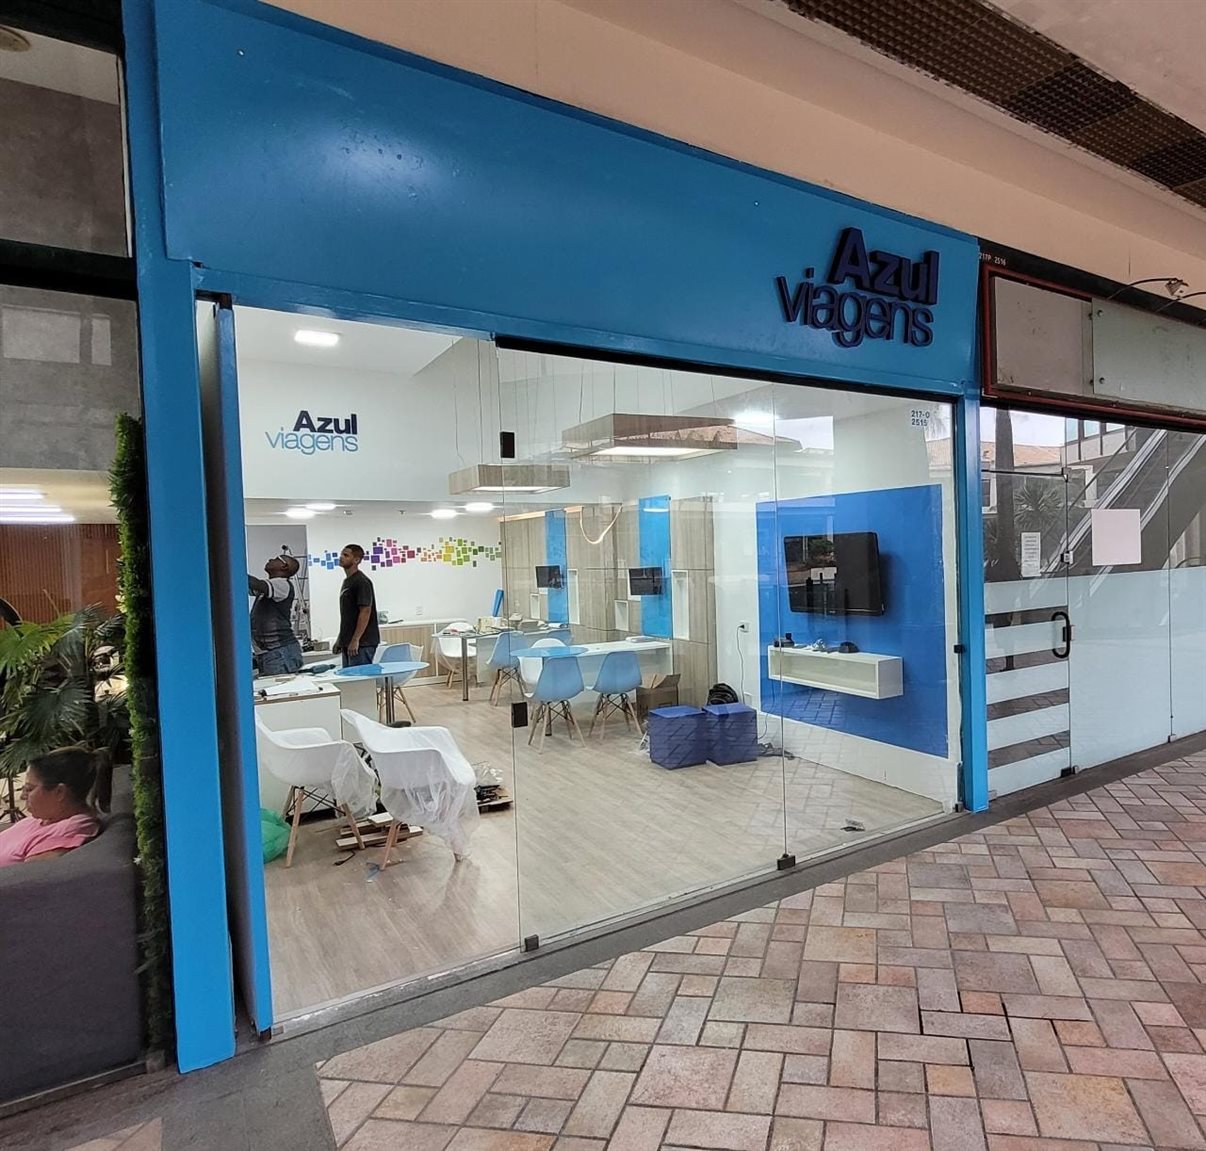 Inauguração da loja da Azul Viagens na Barra da Tijuca 